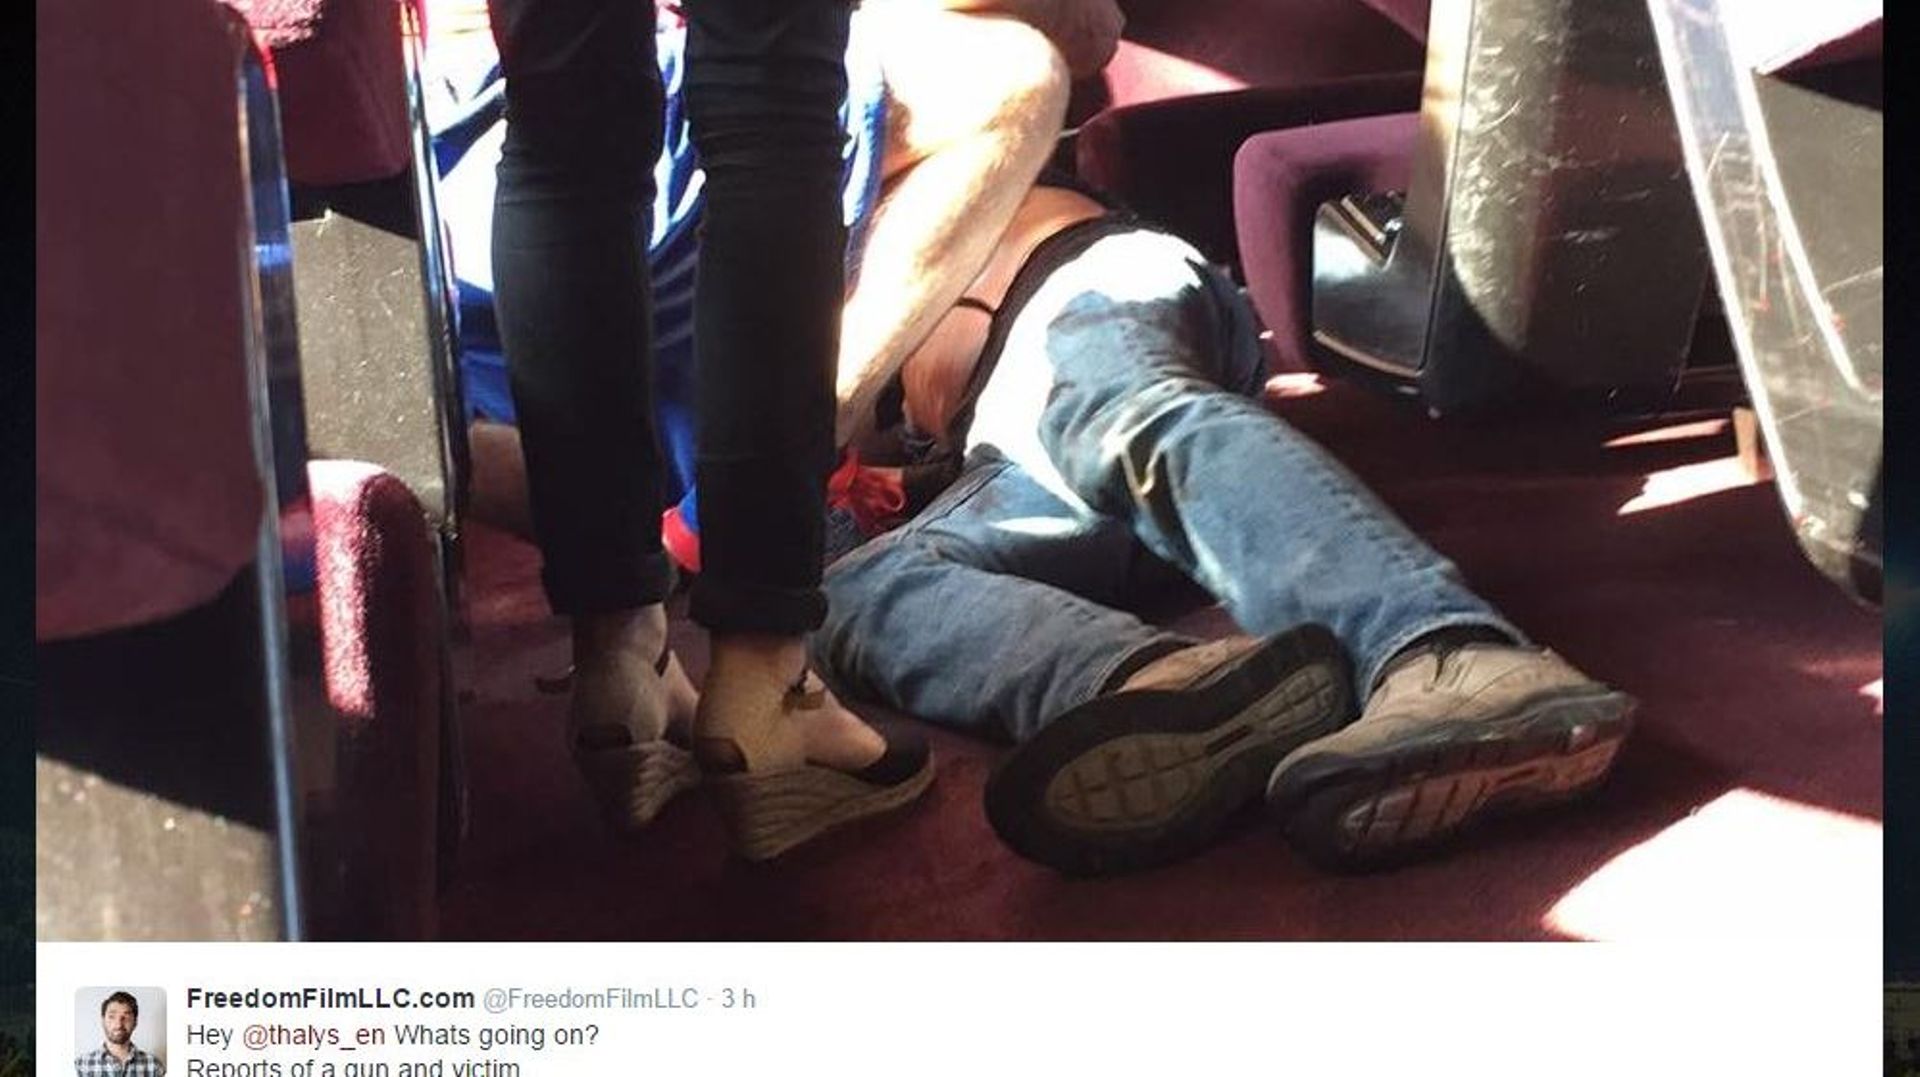 Coups de feu à bord d'un Thalys: "J'ai vu des gens sauter du train"